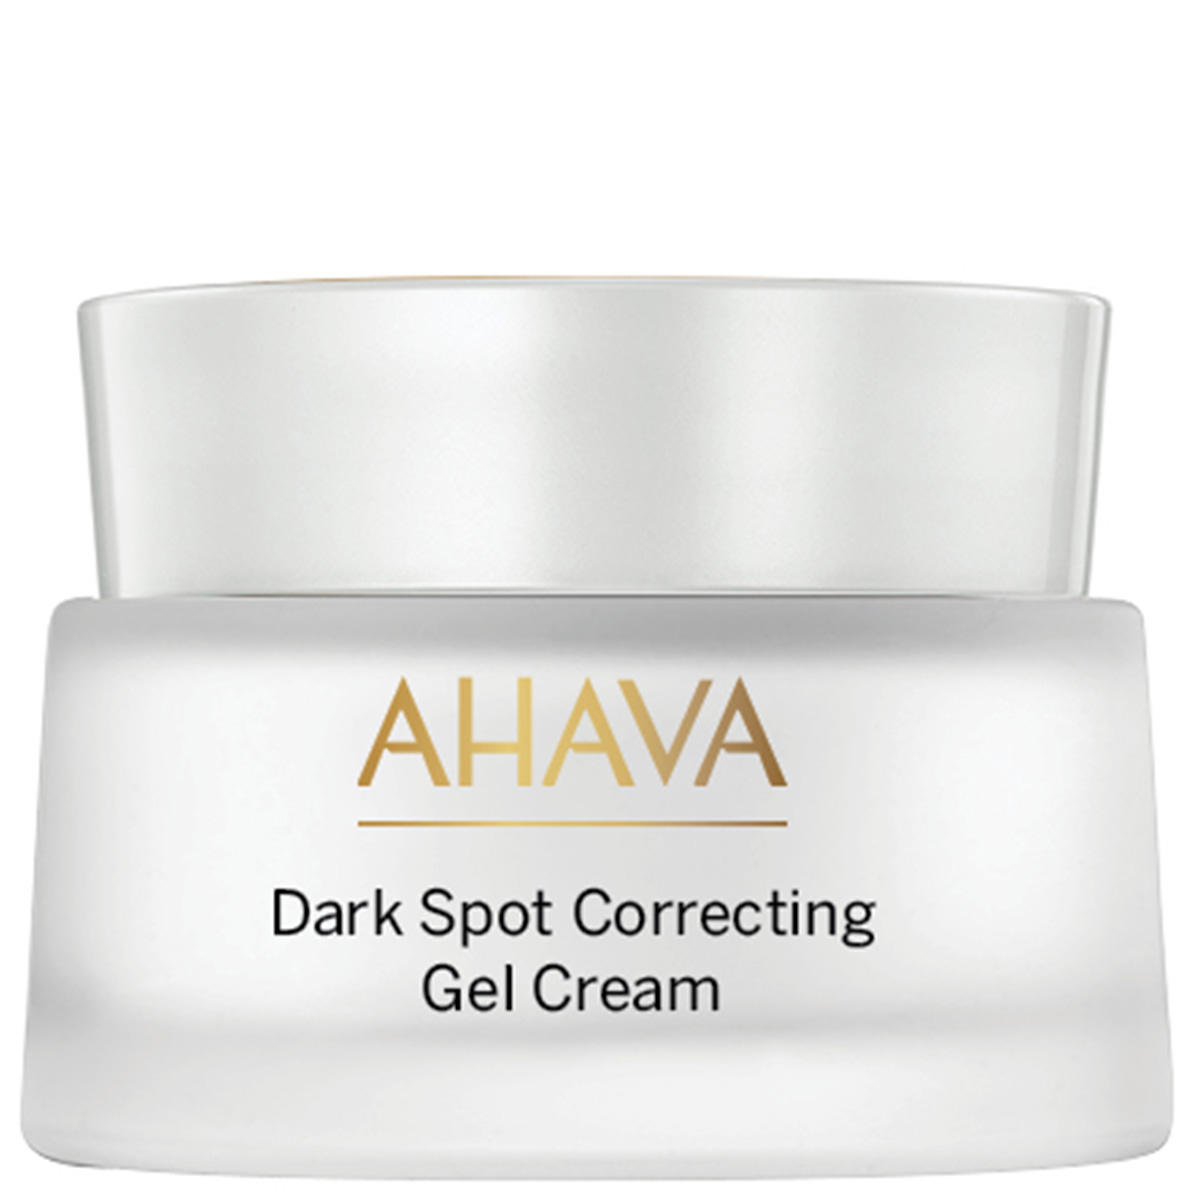 AHAVA Dark Spot Correcting Gel Cream 50 ml - 1